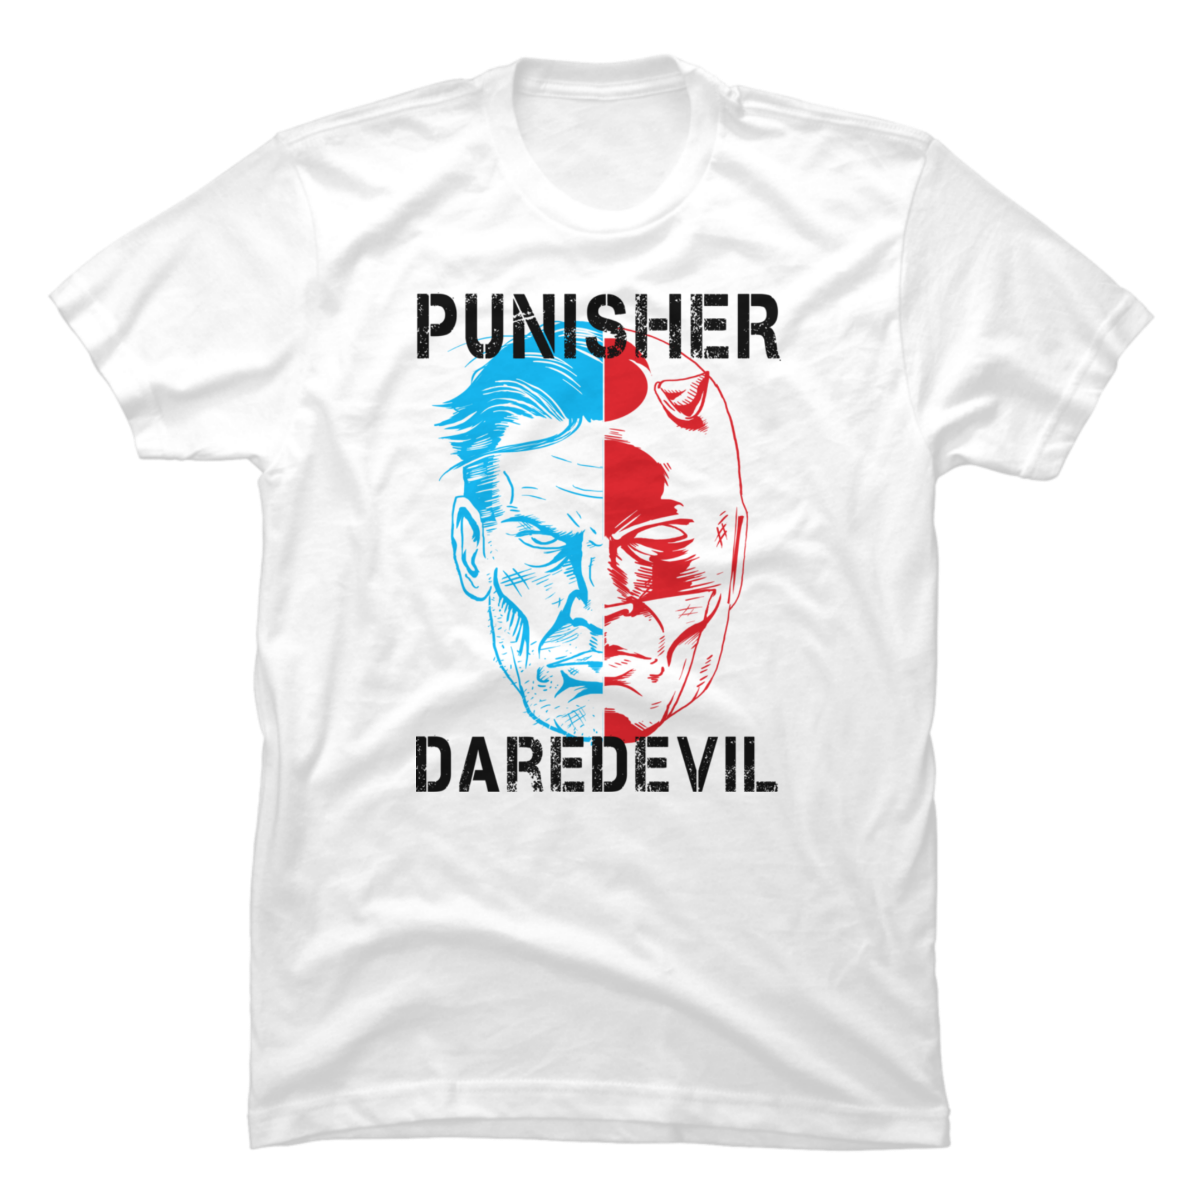 daredevil punisher t shirt